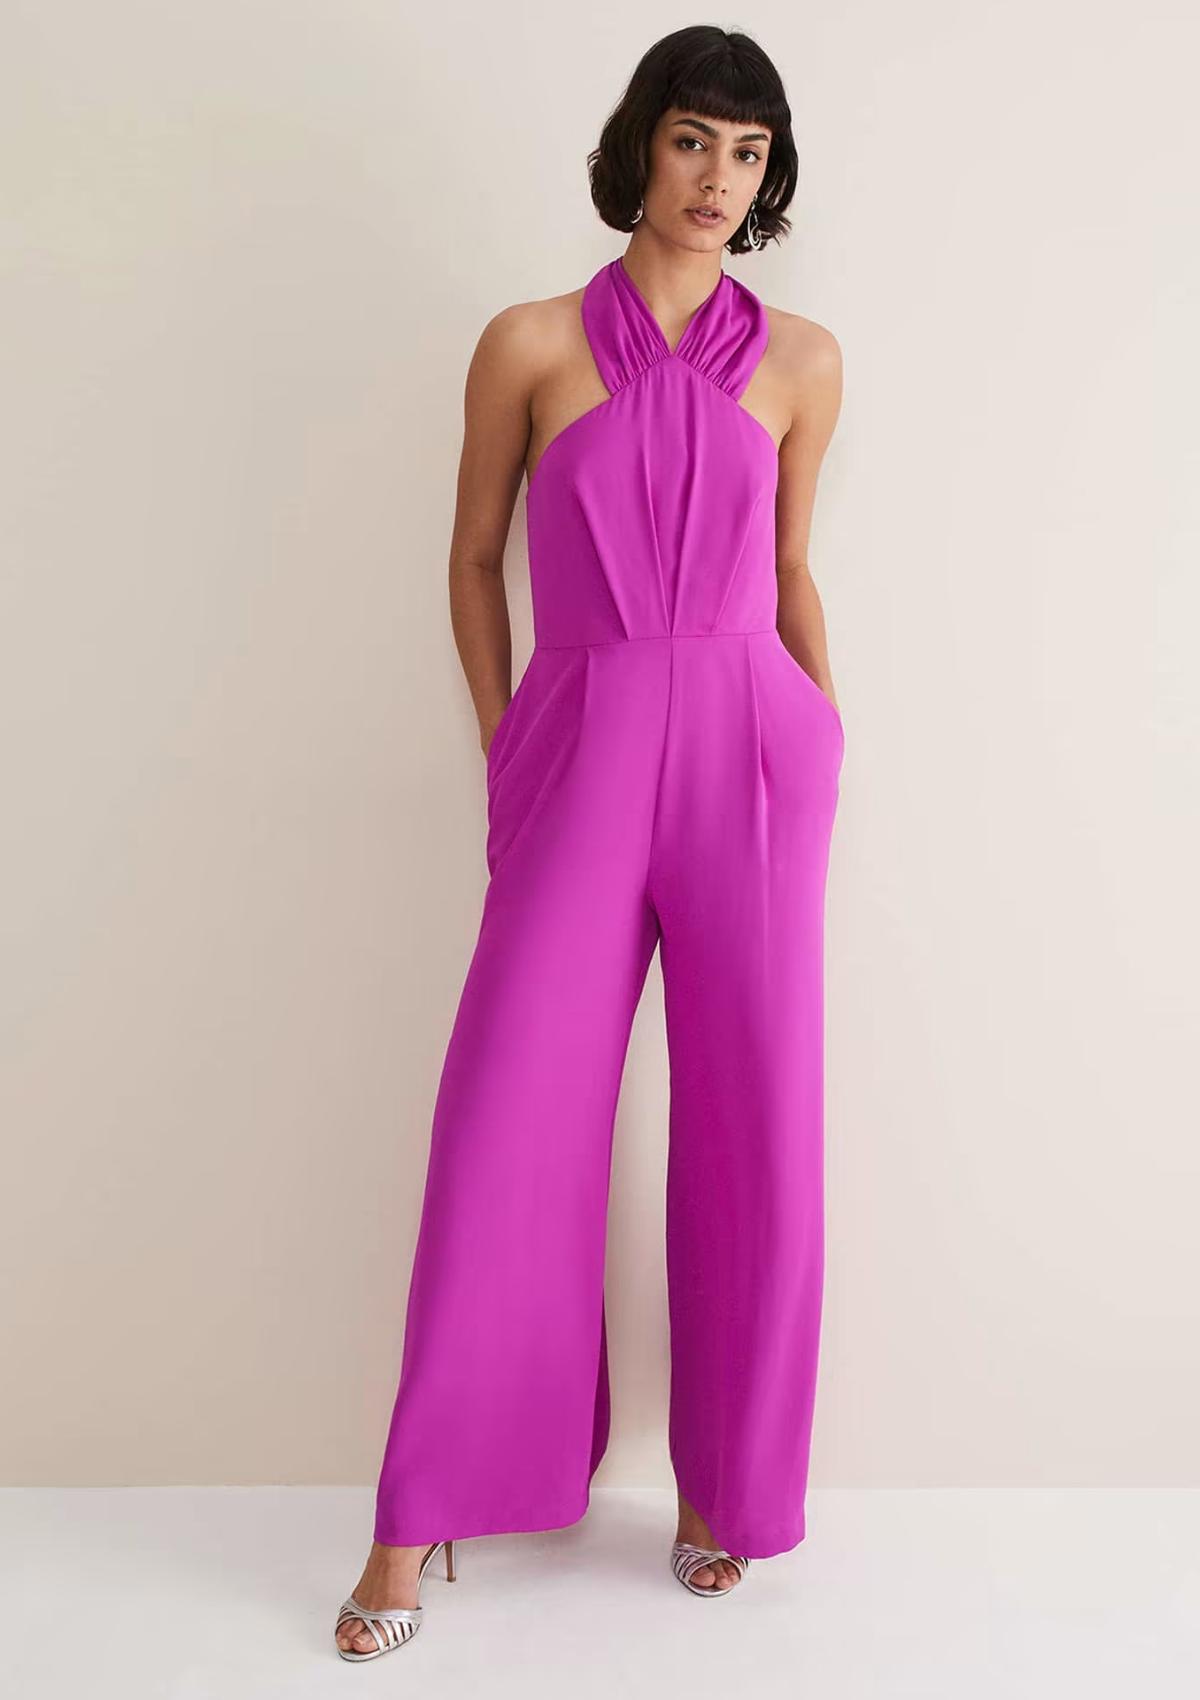 Retro & Vintage Plus Size Hot Pink Puff Sleeve Jumpsuit